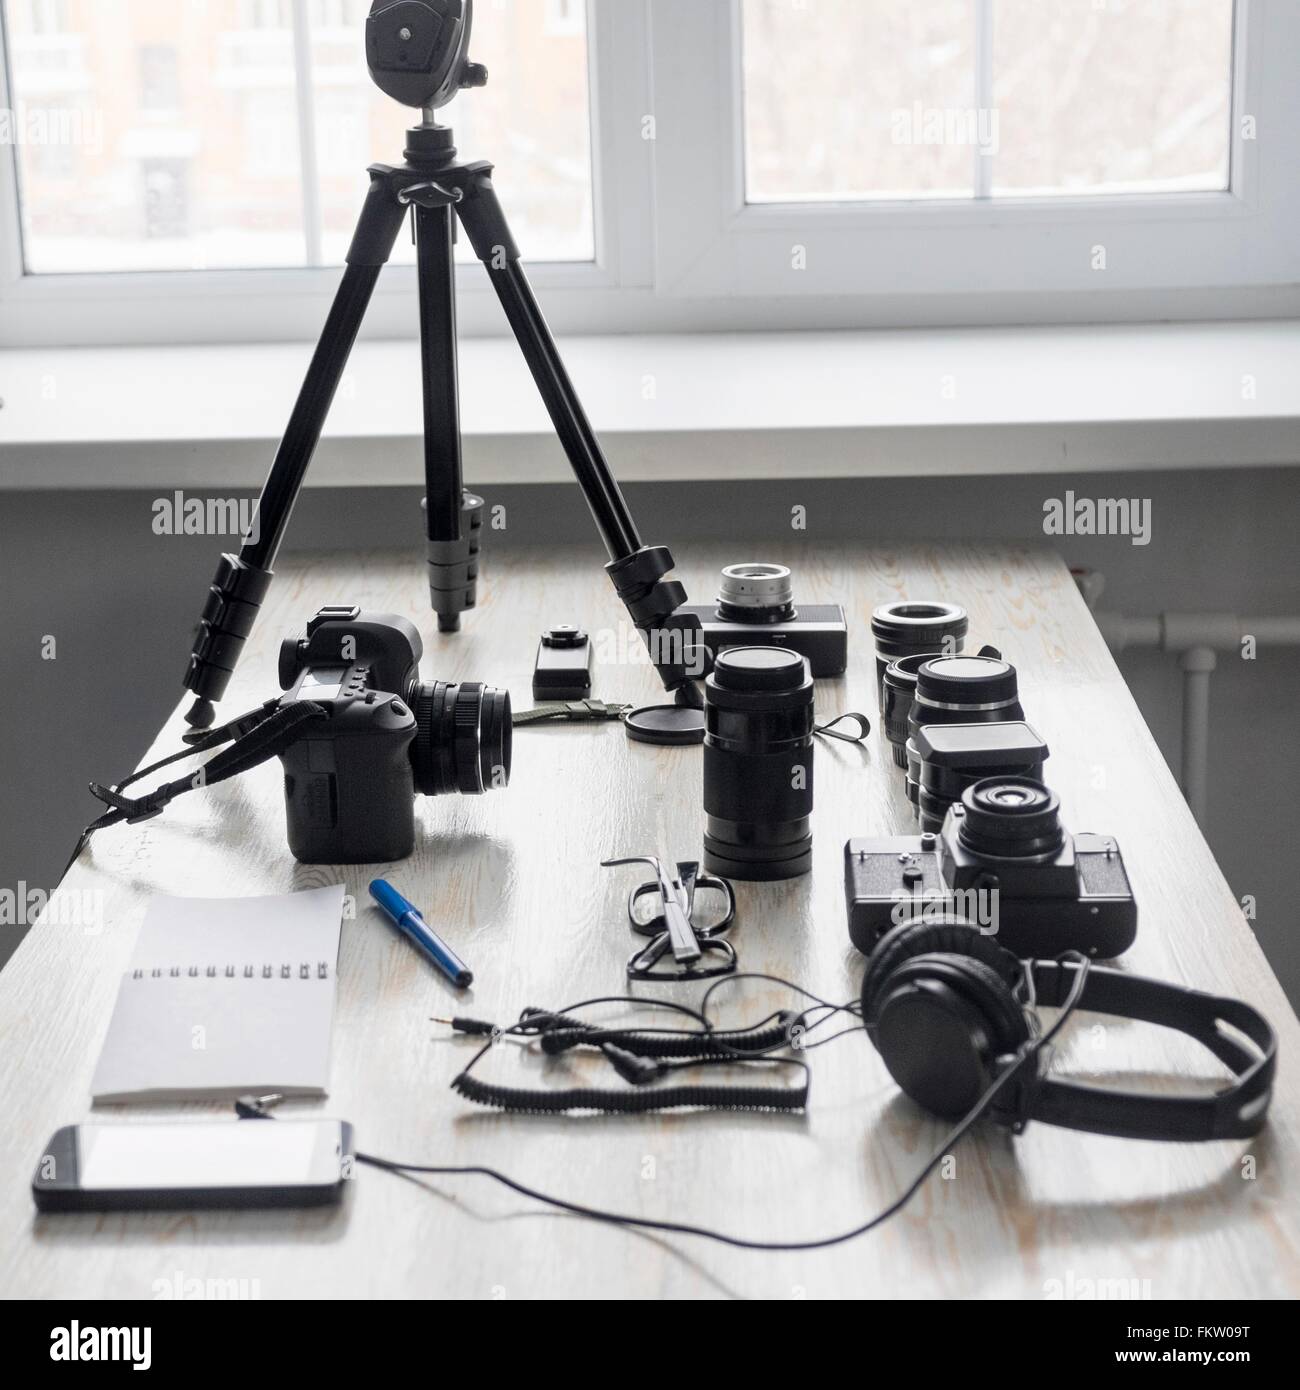 Smartphone and photography equipment on studio desk Stock Photo